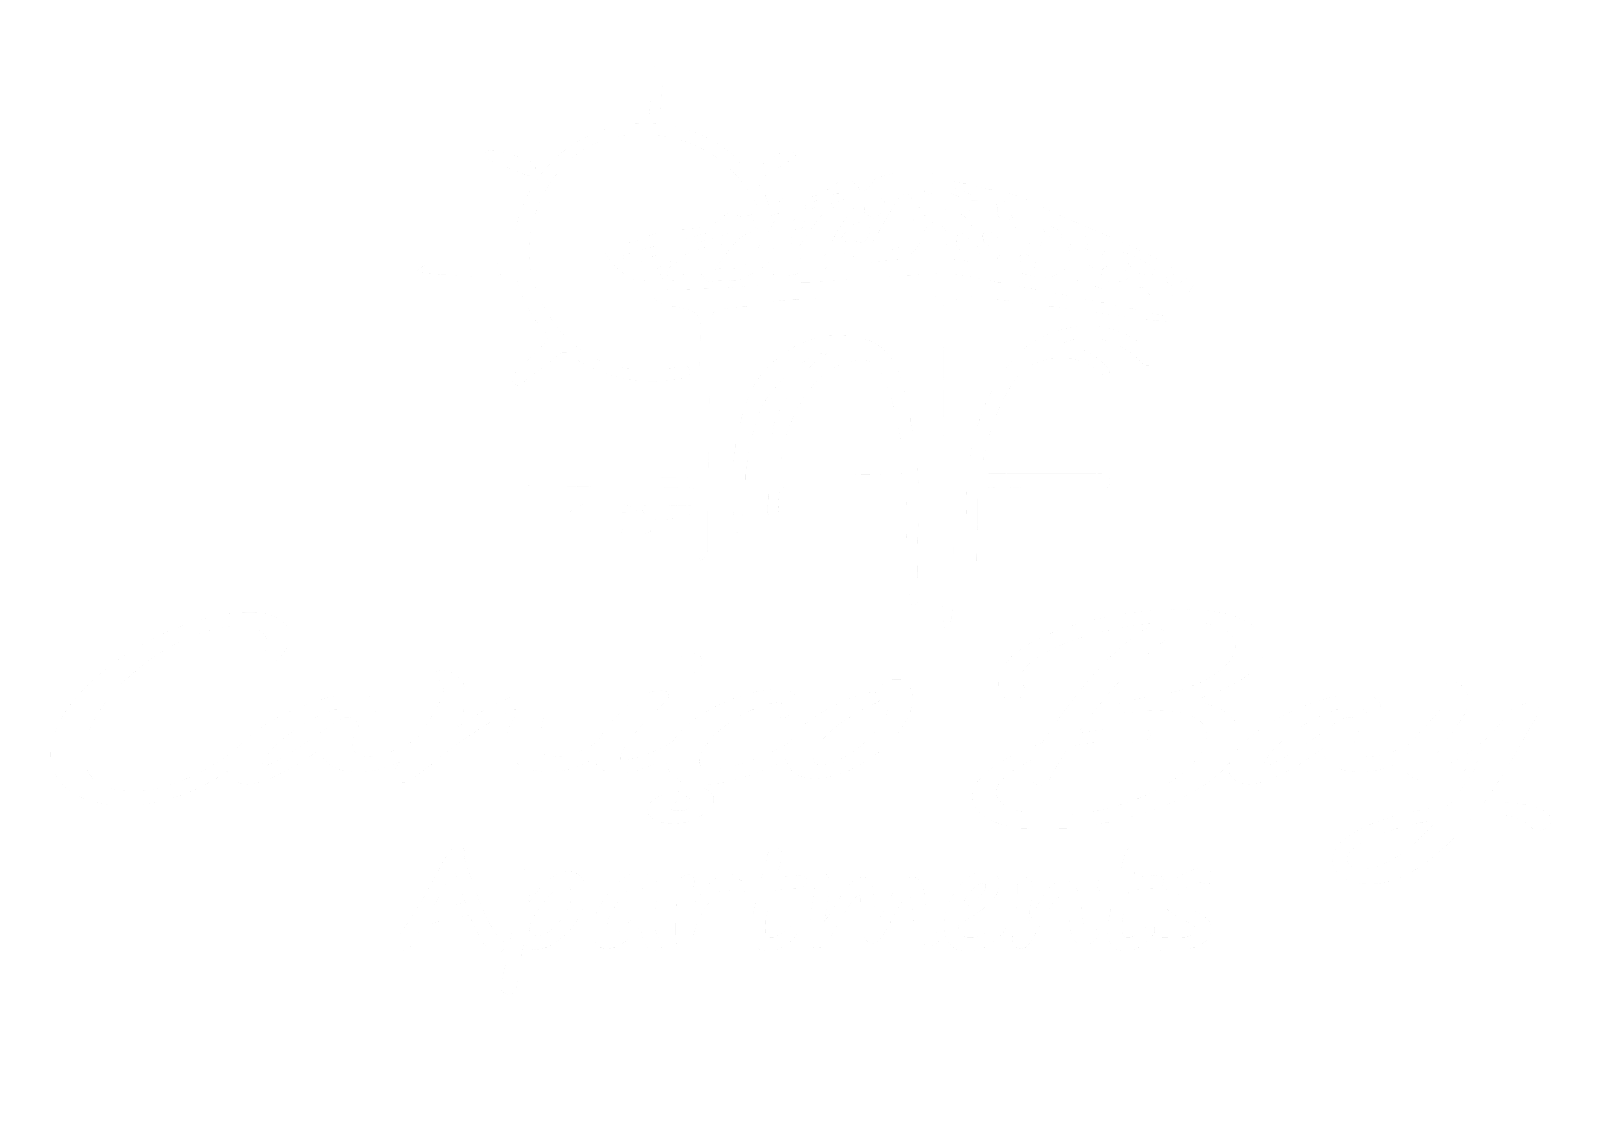 Chambres - Caniço Bay Apartments